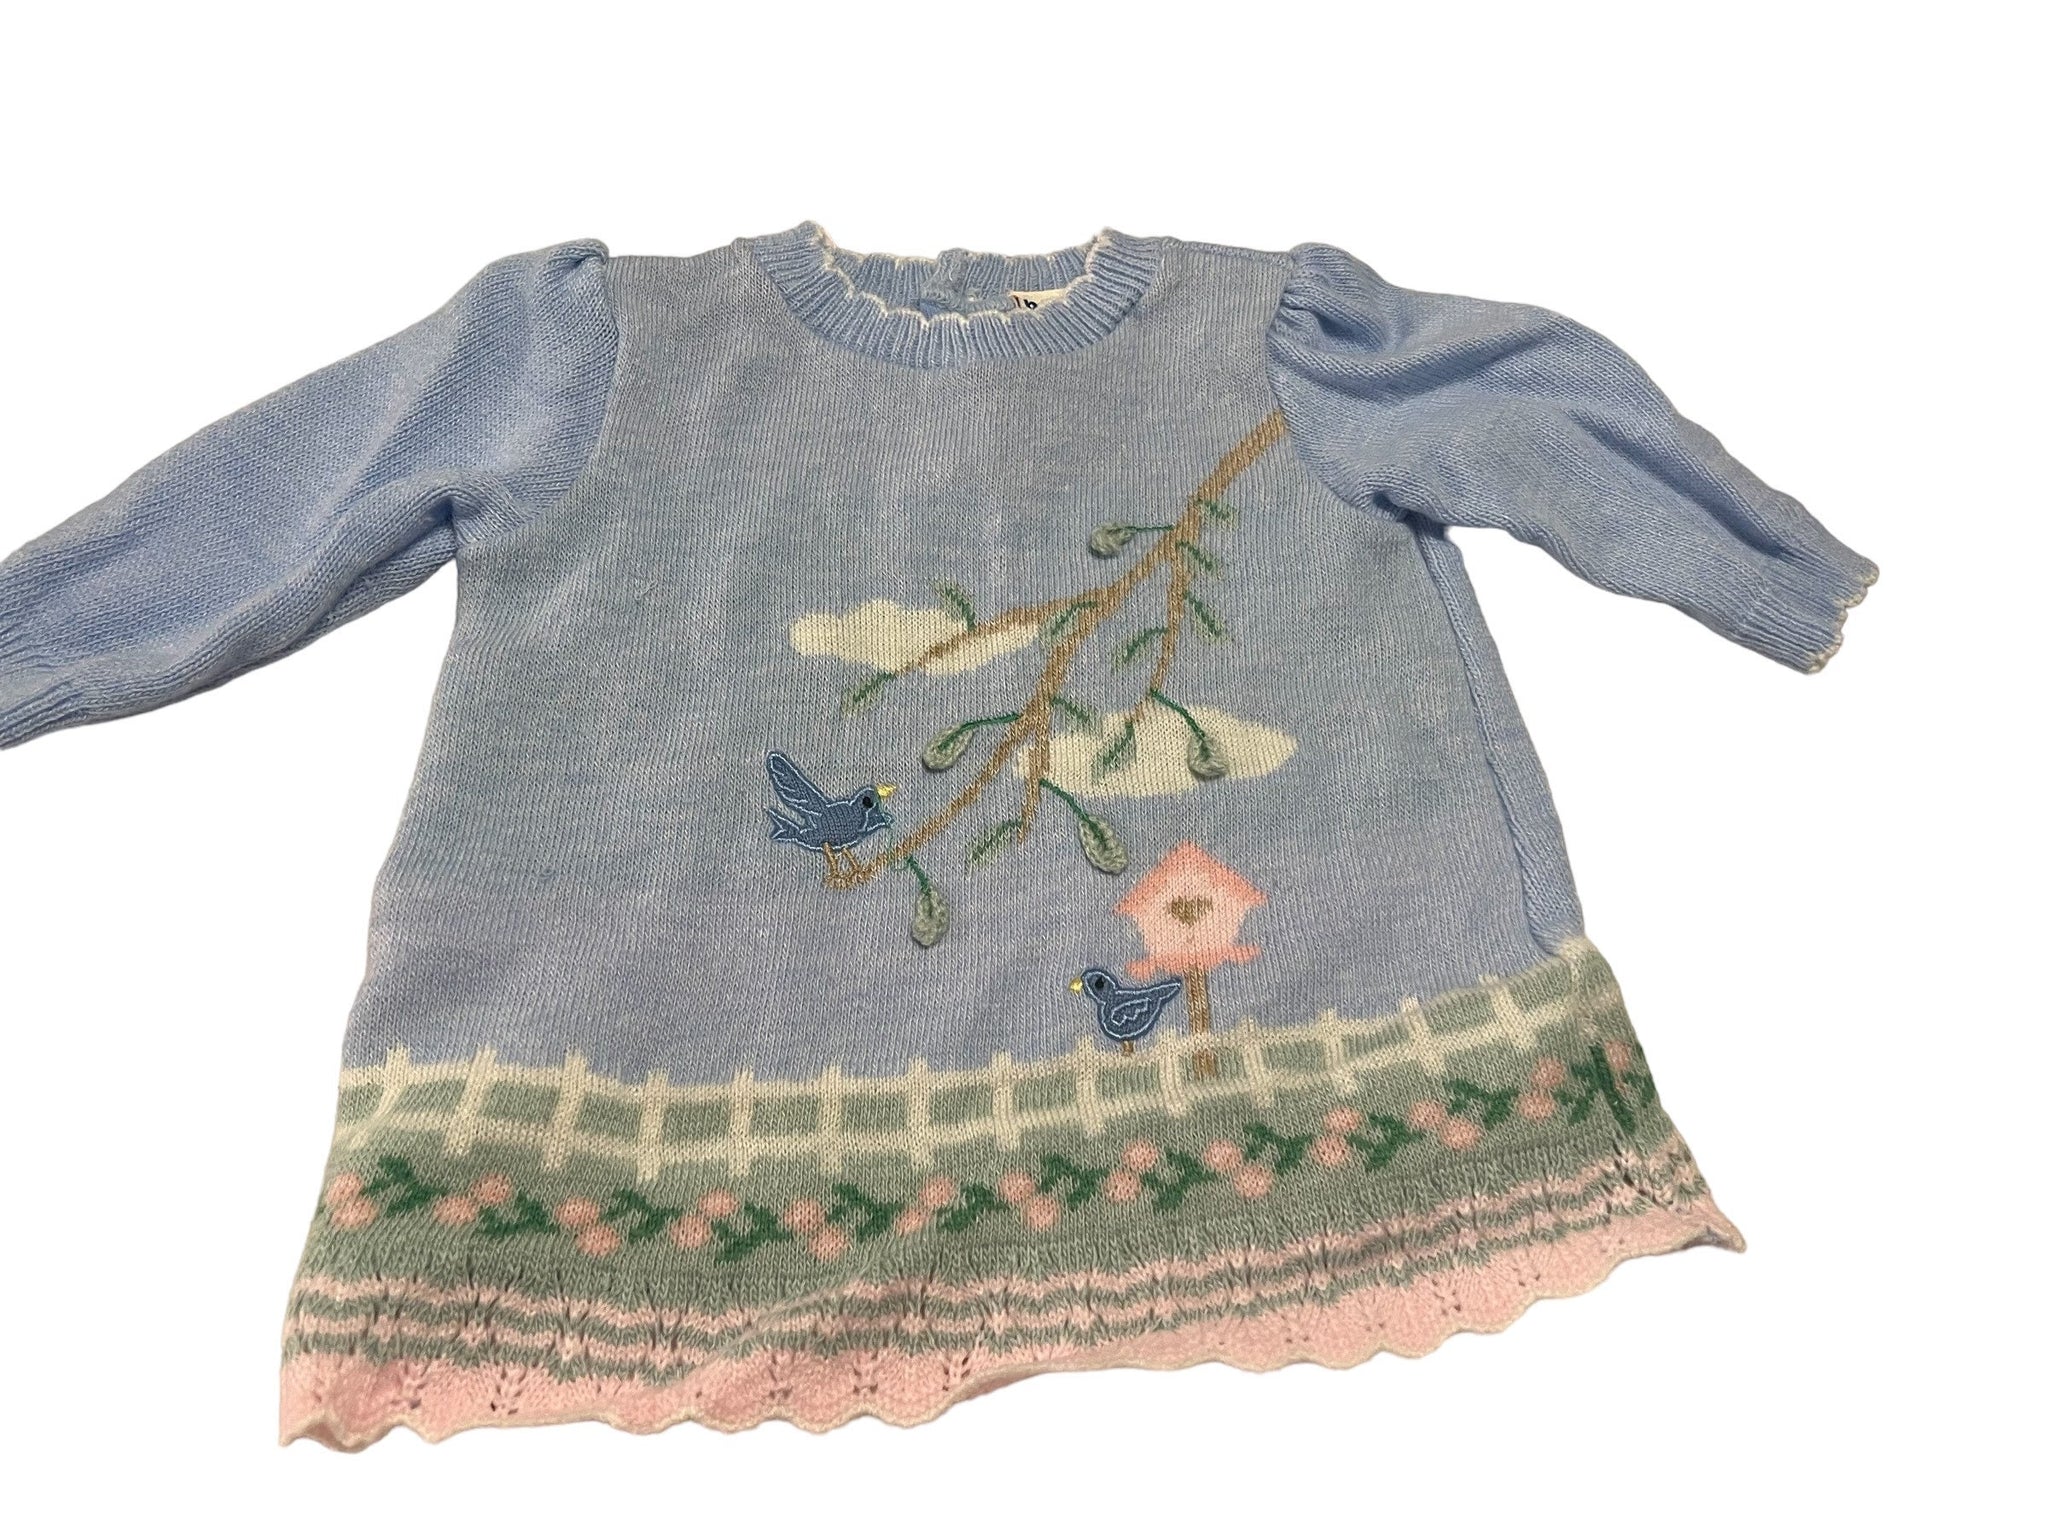 Vintage 80's baby sweater set b.t. kids 6-9 month